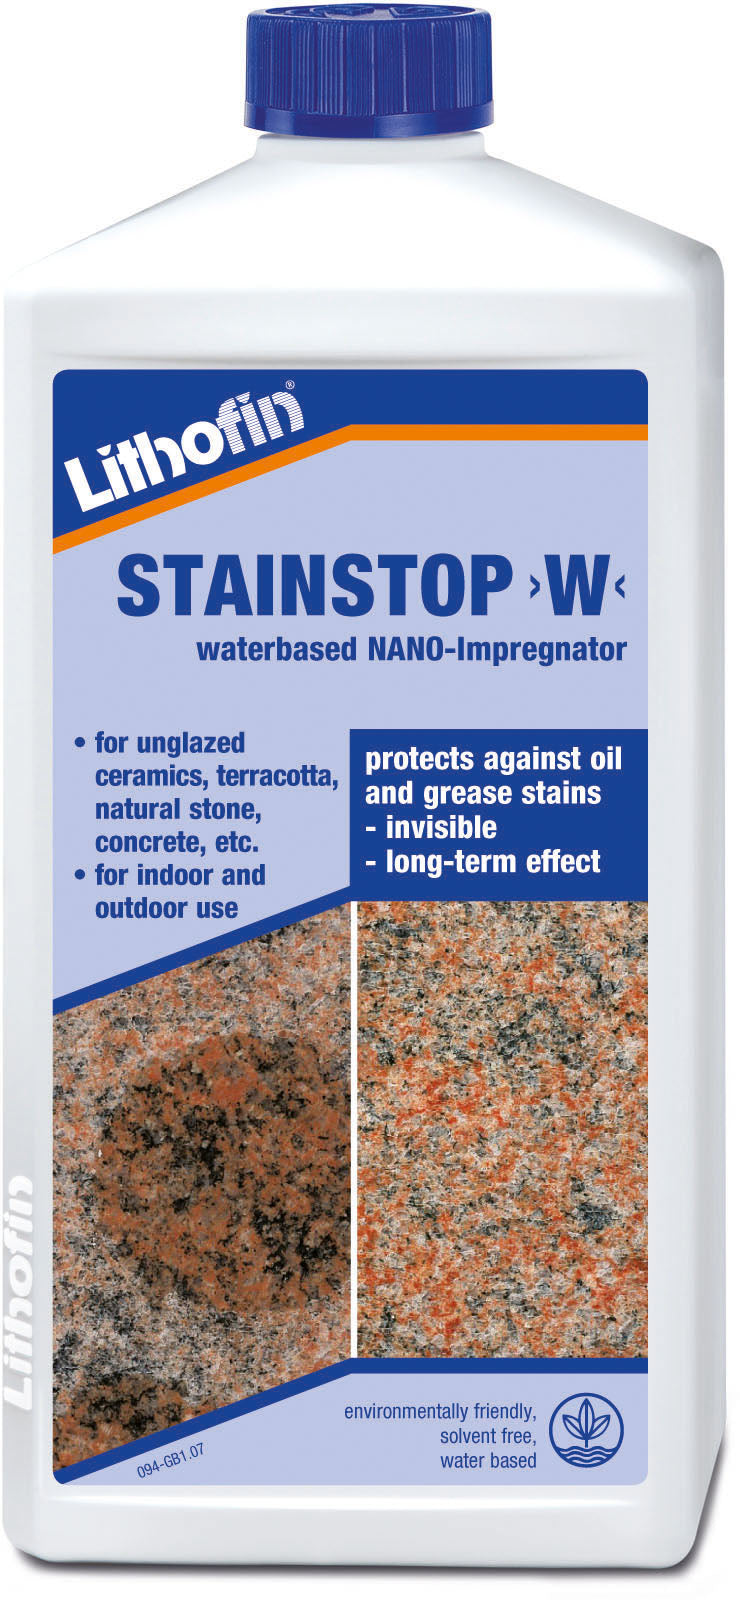 Lithofin stainstop w waterbed nano impregnator 